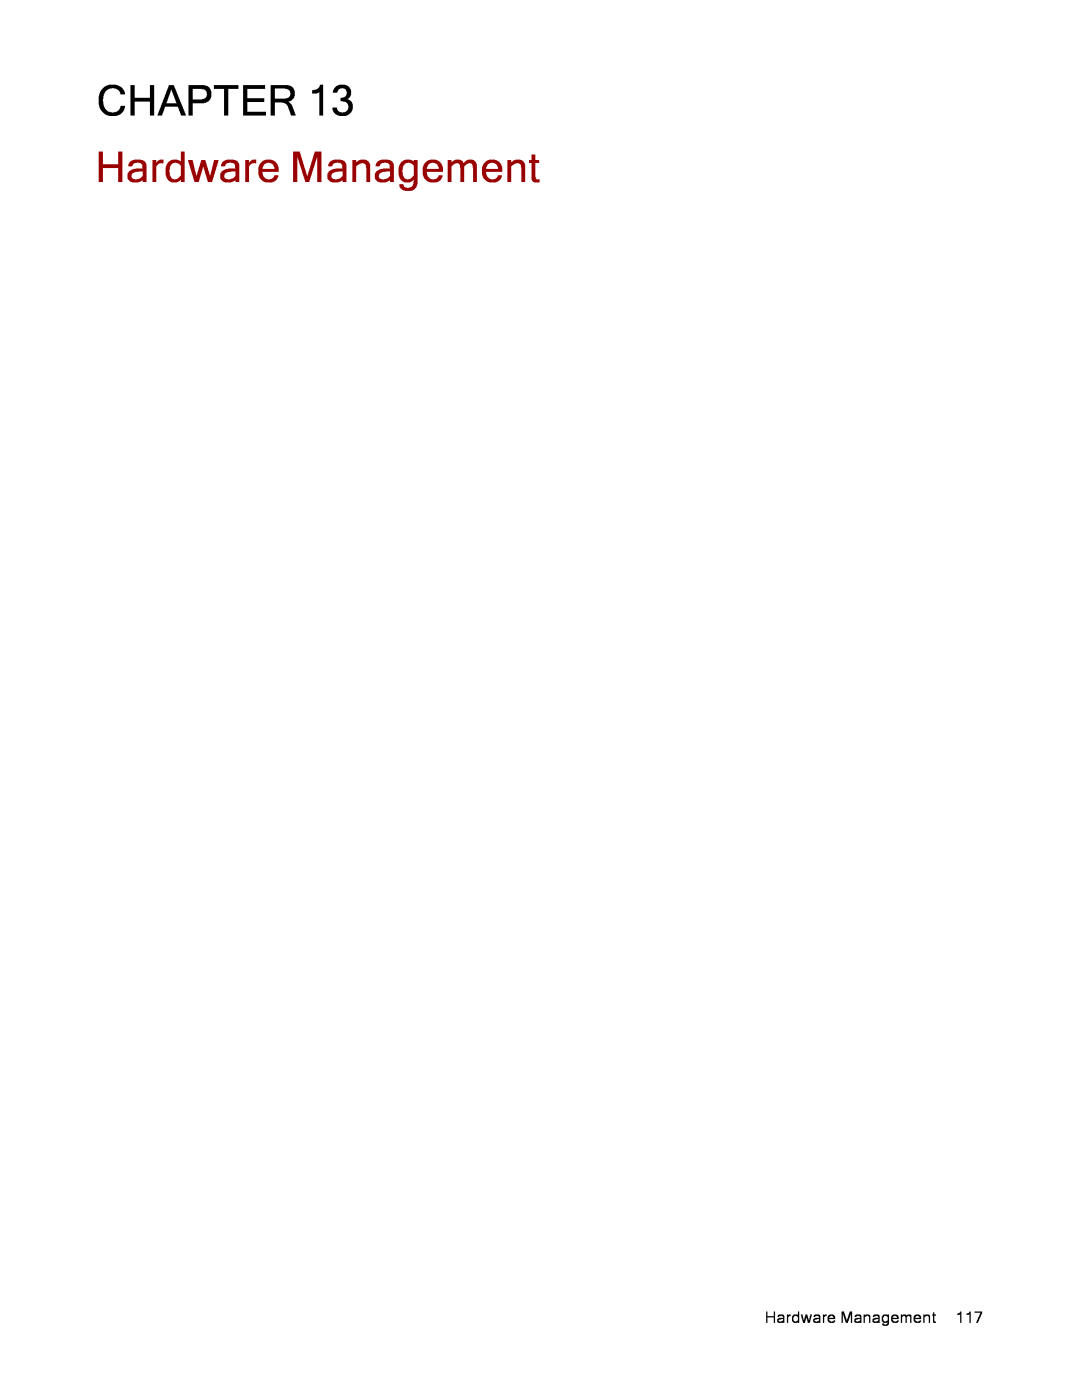 Lenovo 70B89001NA, 70B89003NA, 70B89000NA manual Hardware Management, Chapter 